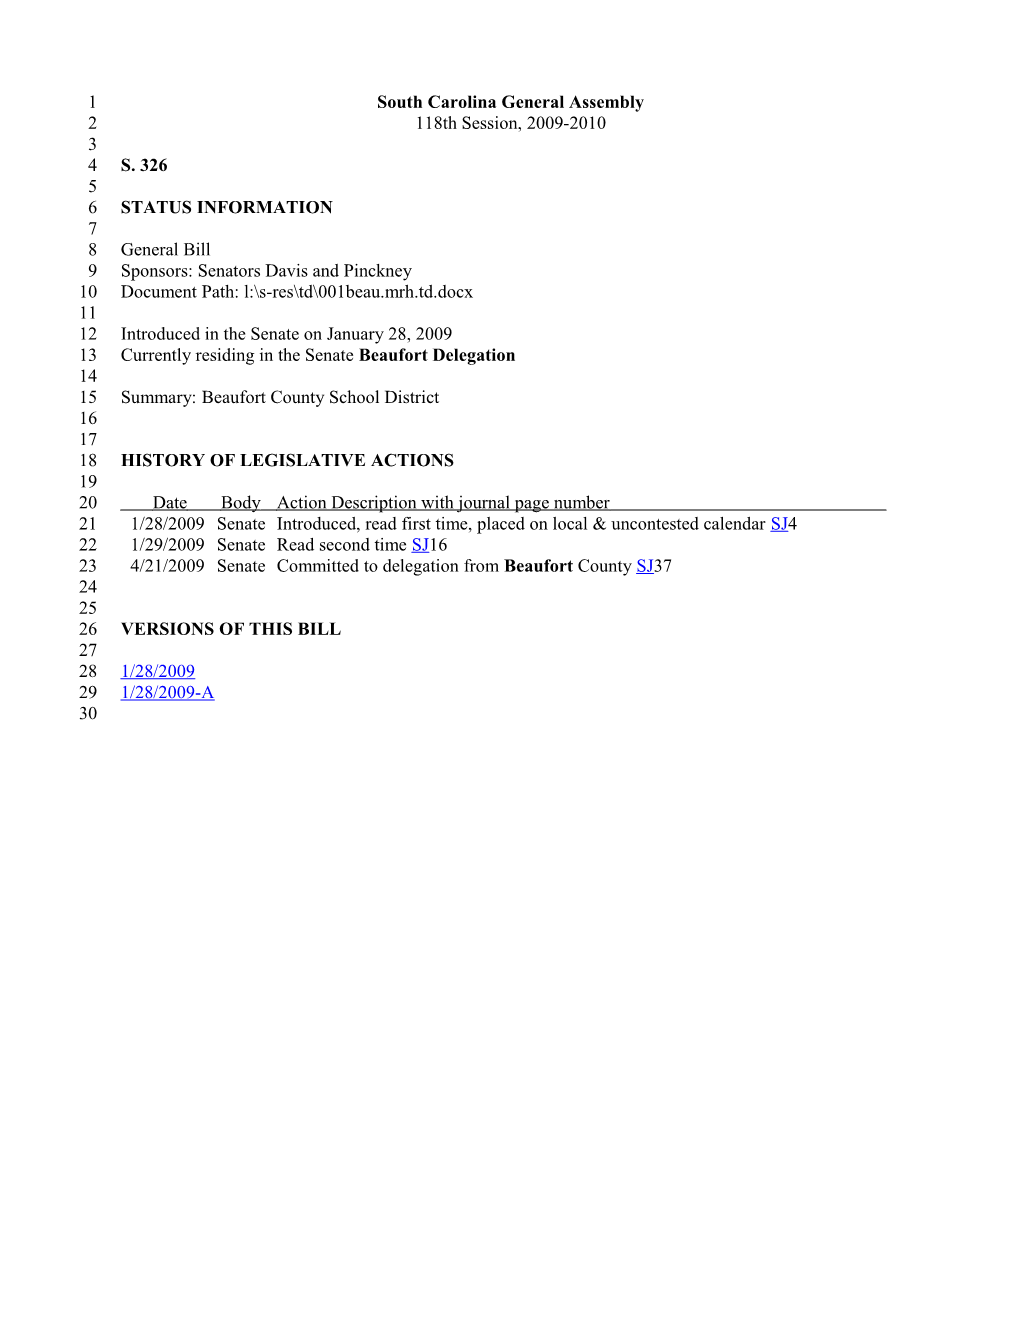 2009-2010 Bill 326: Beaufort County School District - South Carolina Legislature Online